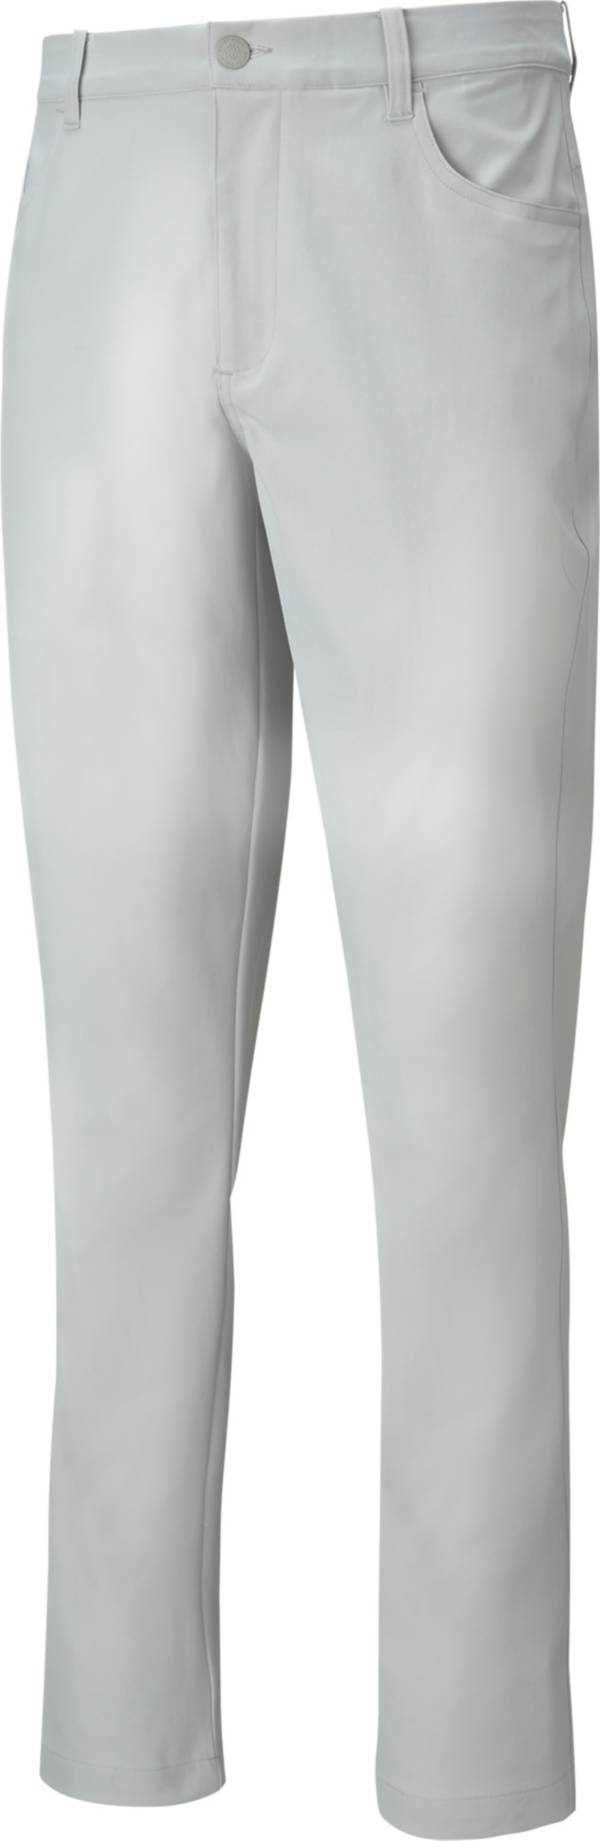 Puma Men's Jackpot 5 Pocket Golf Pants product image